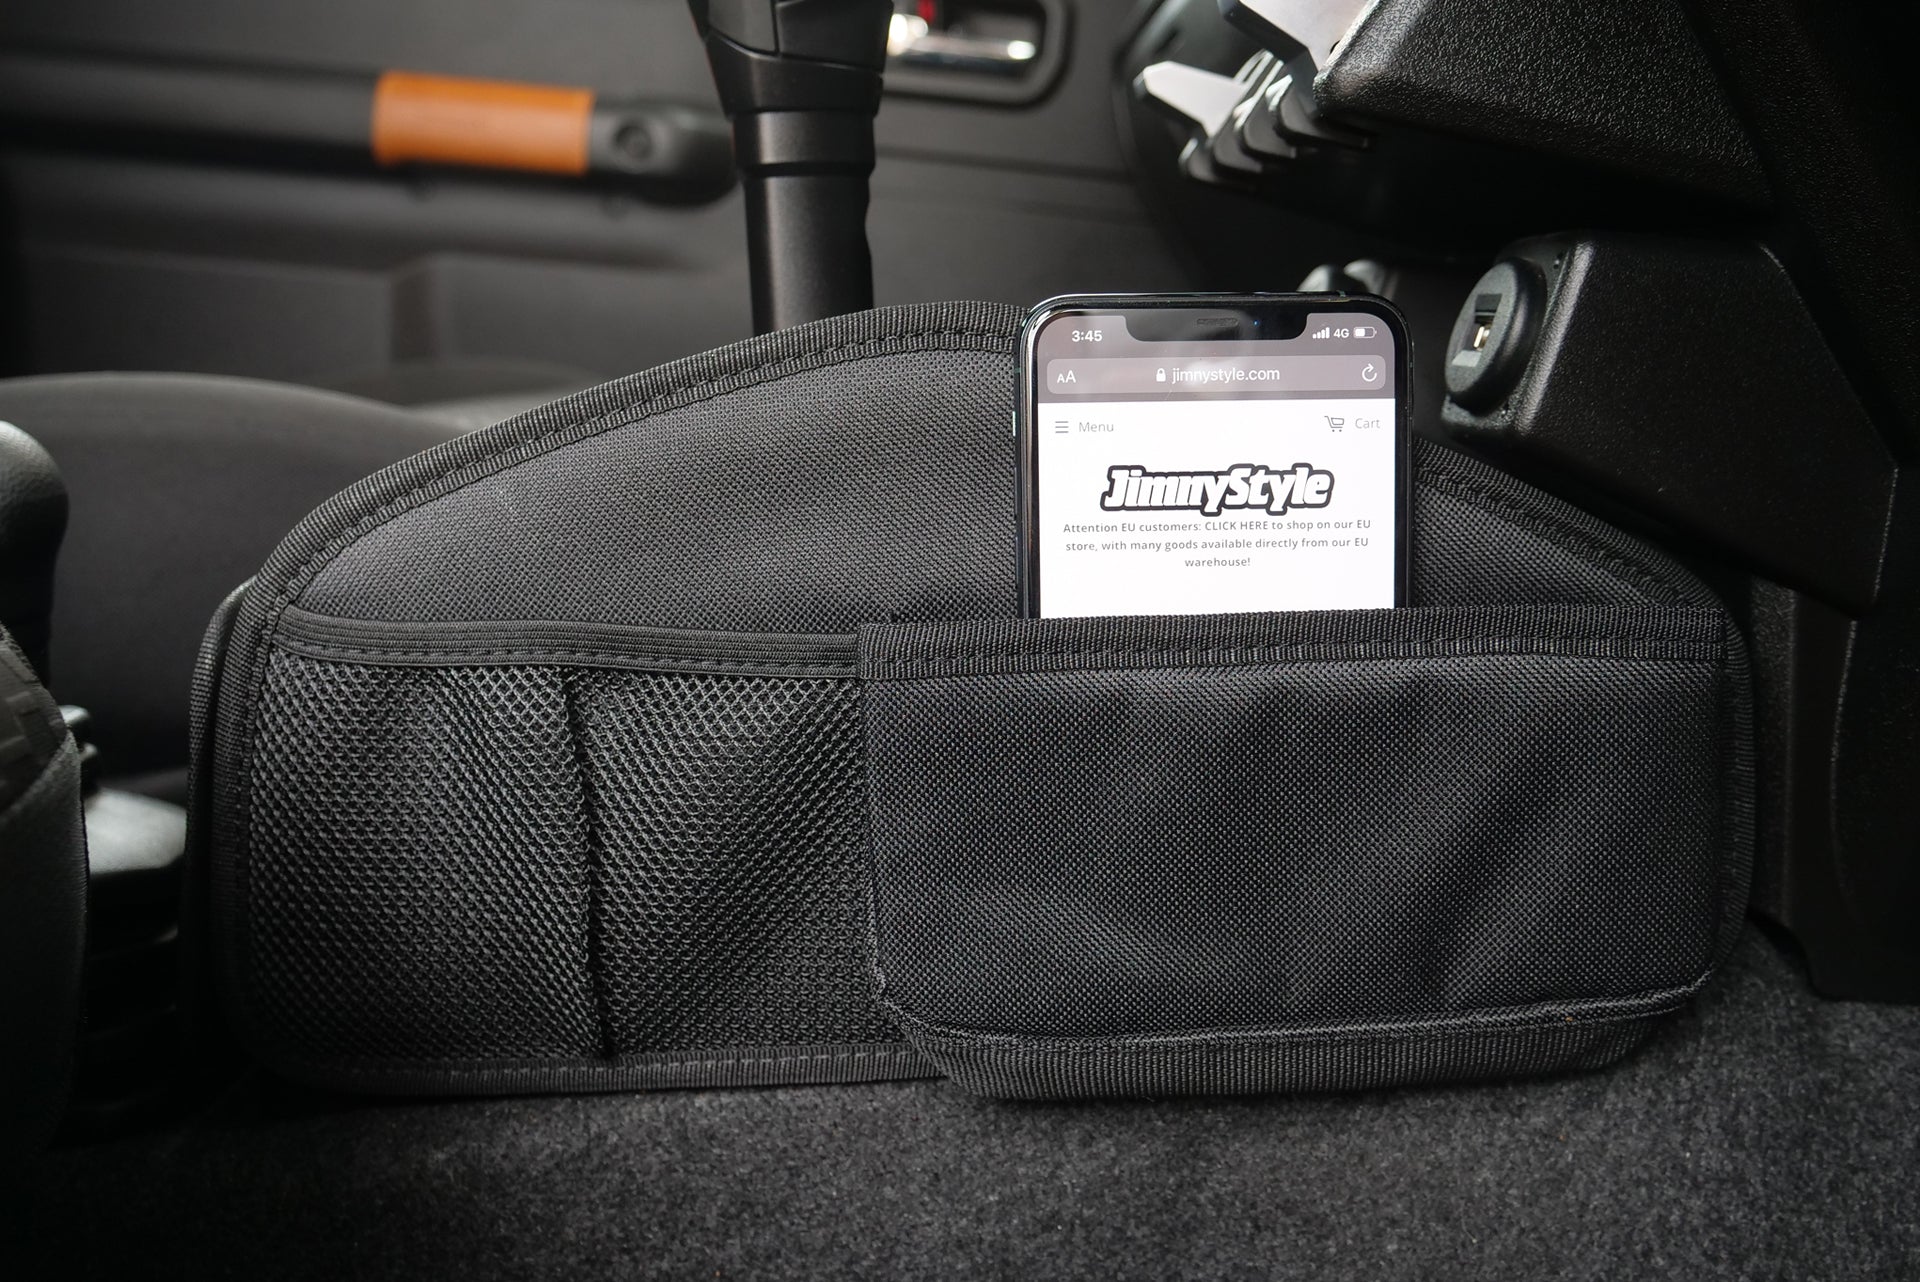 Uraqt Car Handbag Holder Organiser Pocket, Car Tidy Net Storage Organizer  Bag Between Seats, Car Document Holder Pet Barrier Of Backseat, Car Seat  Gap